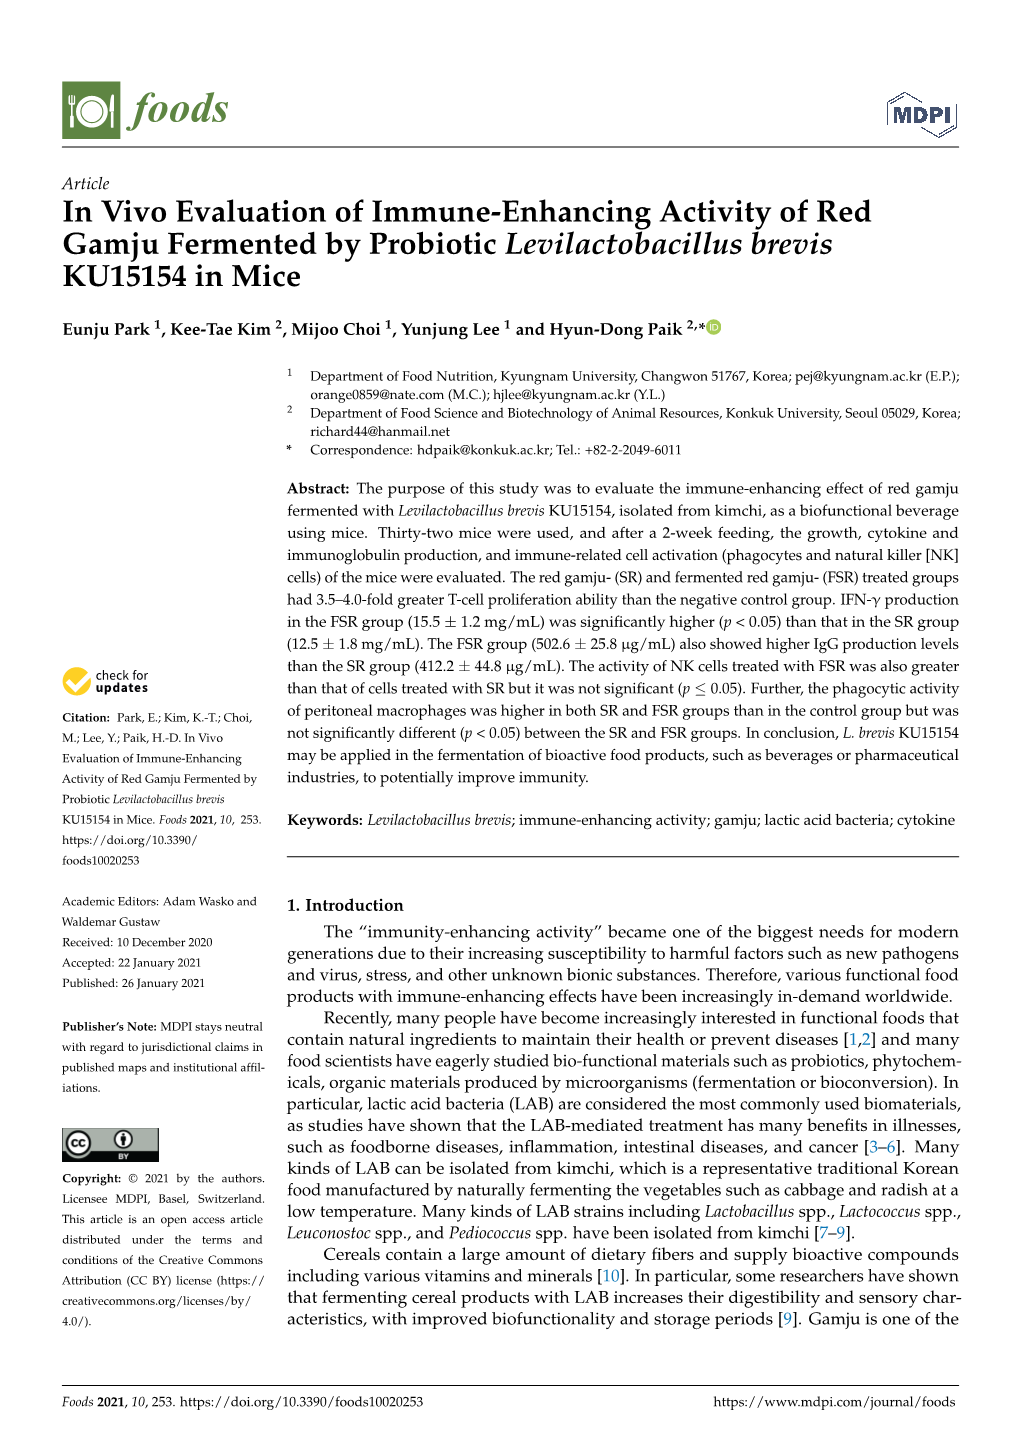 In Vivo Evaluation of Immune-Enhancing Activity of Red Gamju Fermented by Probiotic Levilactobacillus Brevis KU15154 in Mice